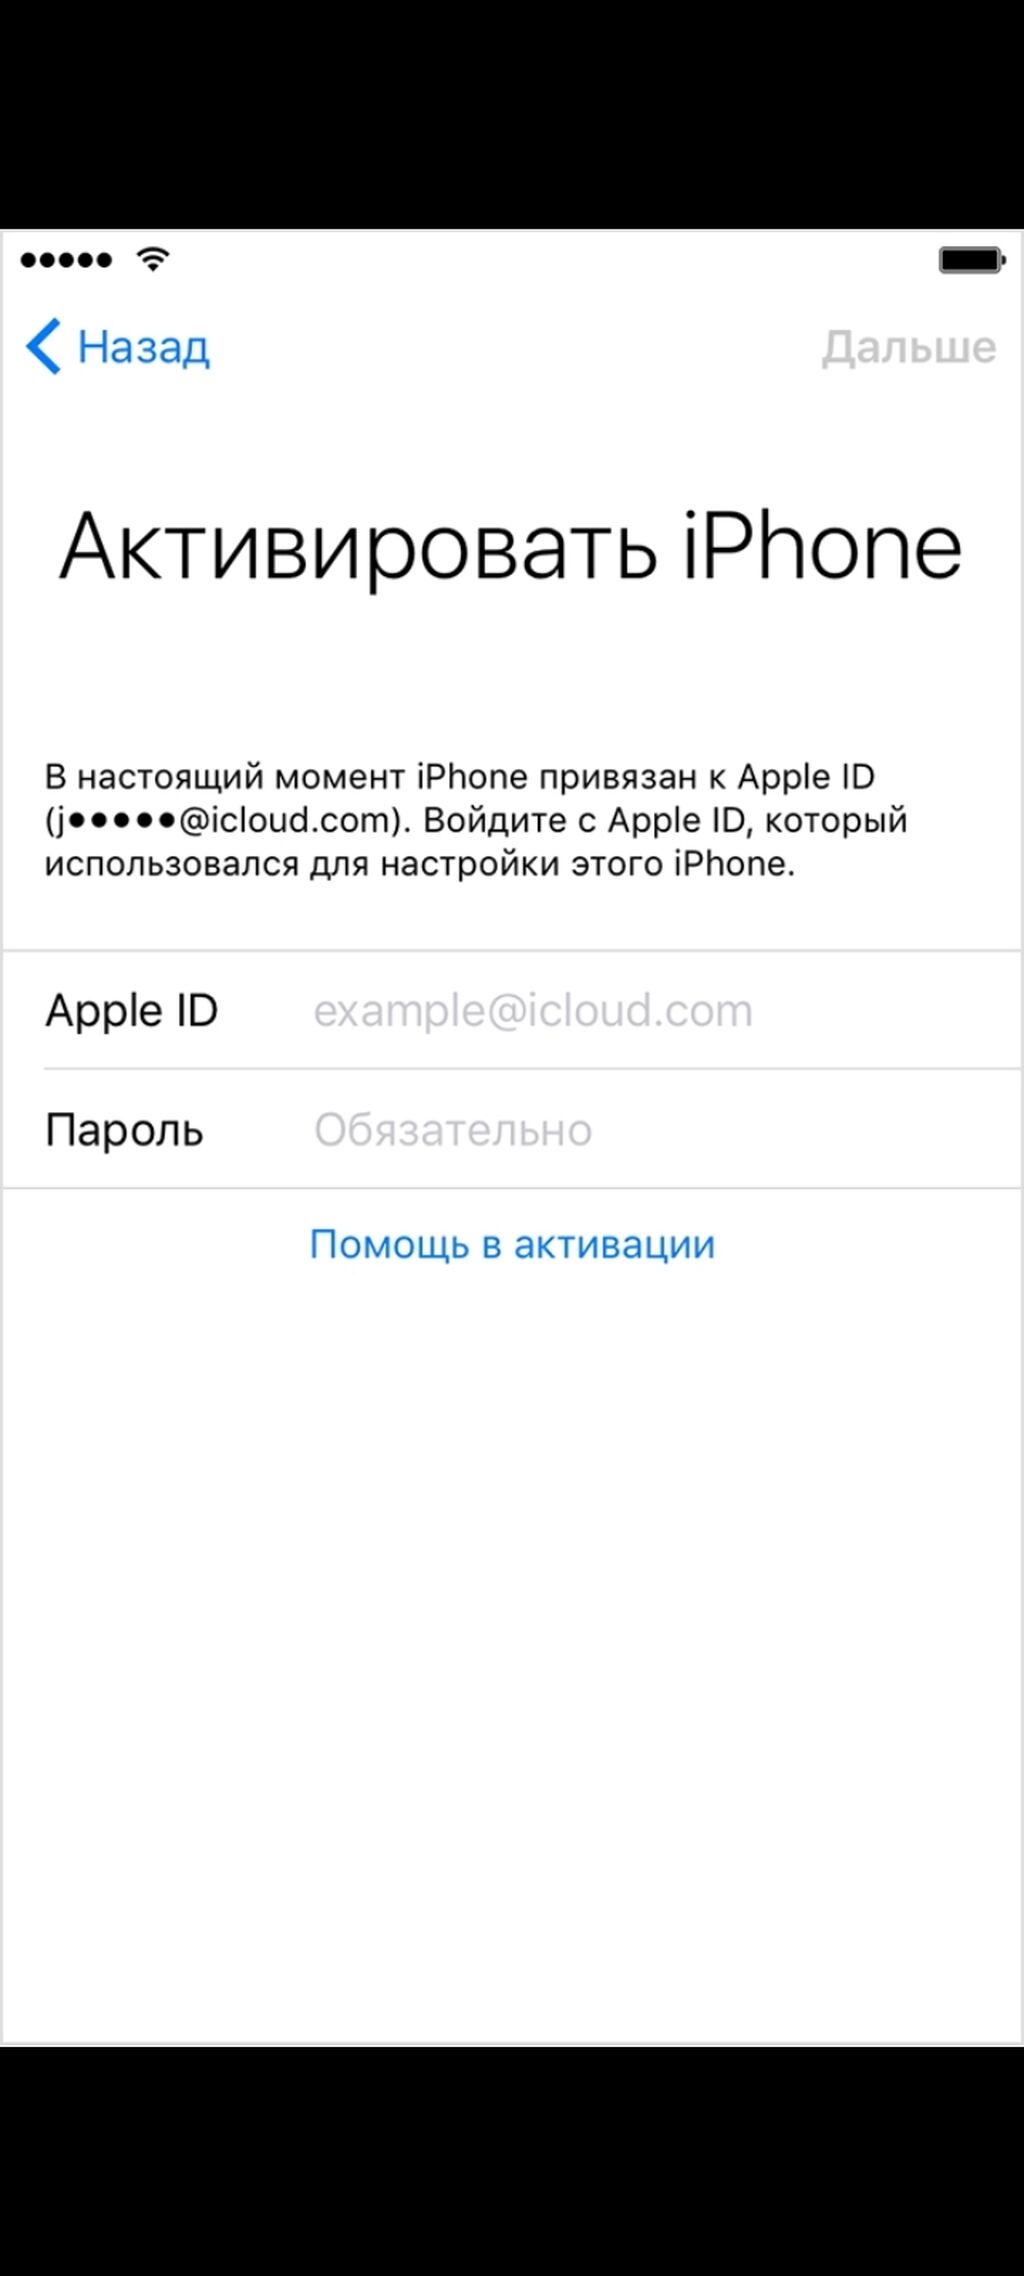 Id iphone разблокировать. Пароль для Apple ID. Apple ID забыл пароль. Если забыл Apple ID. Если забыл пароль Apple ID.